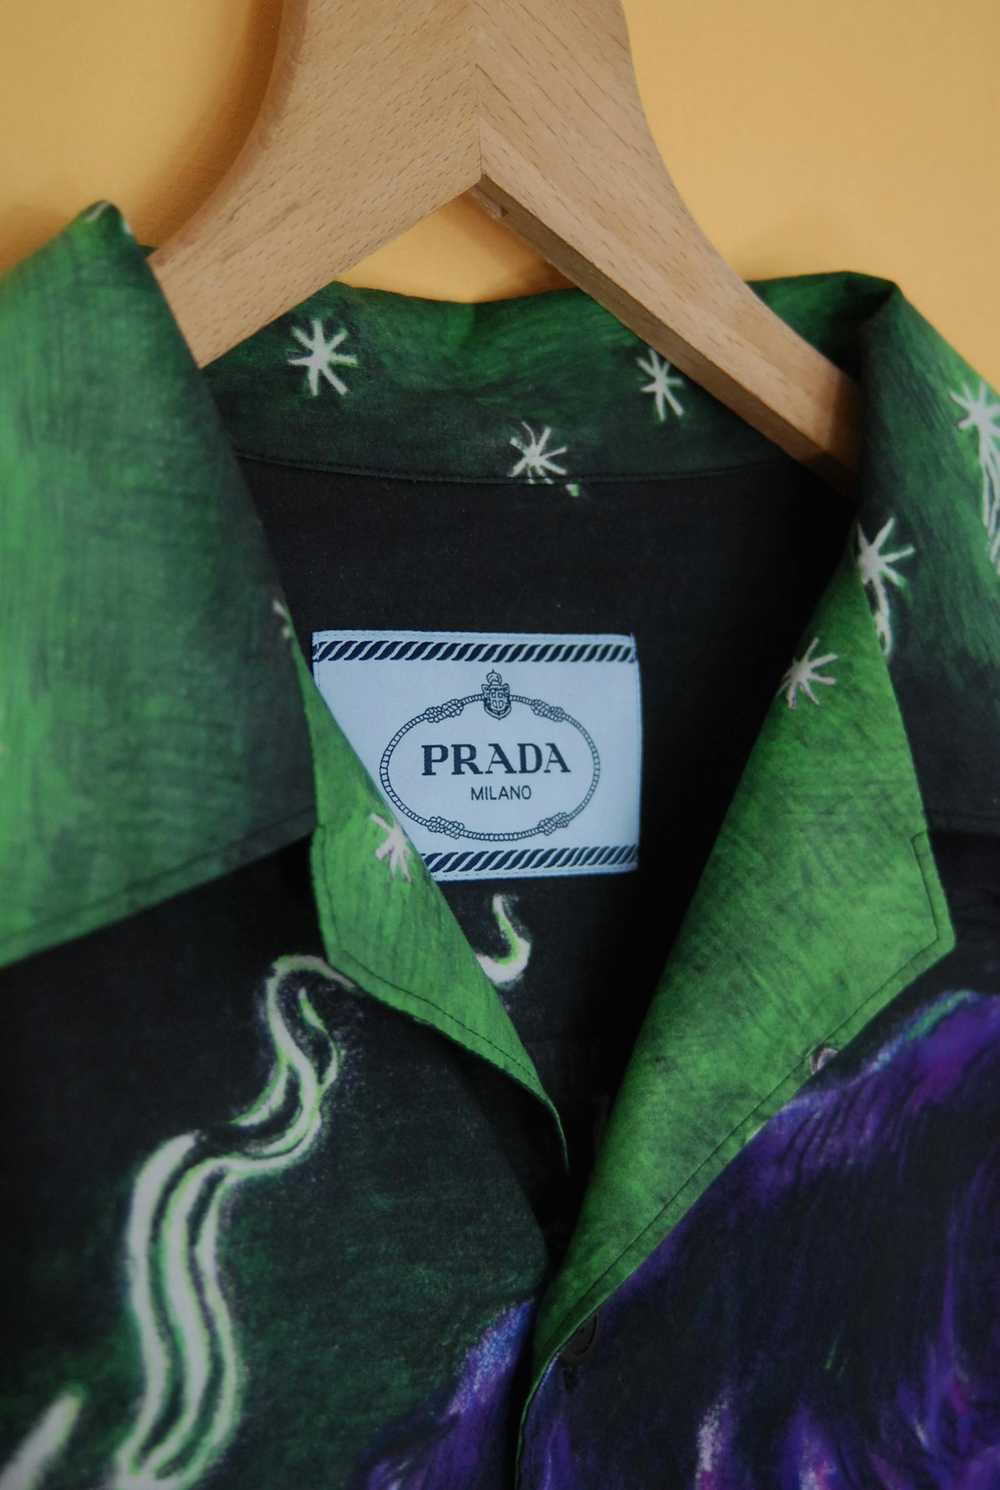 Prada Best price! Prada Impossible True Love shirt - image 2